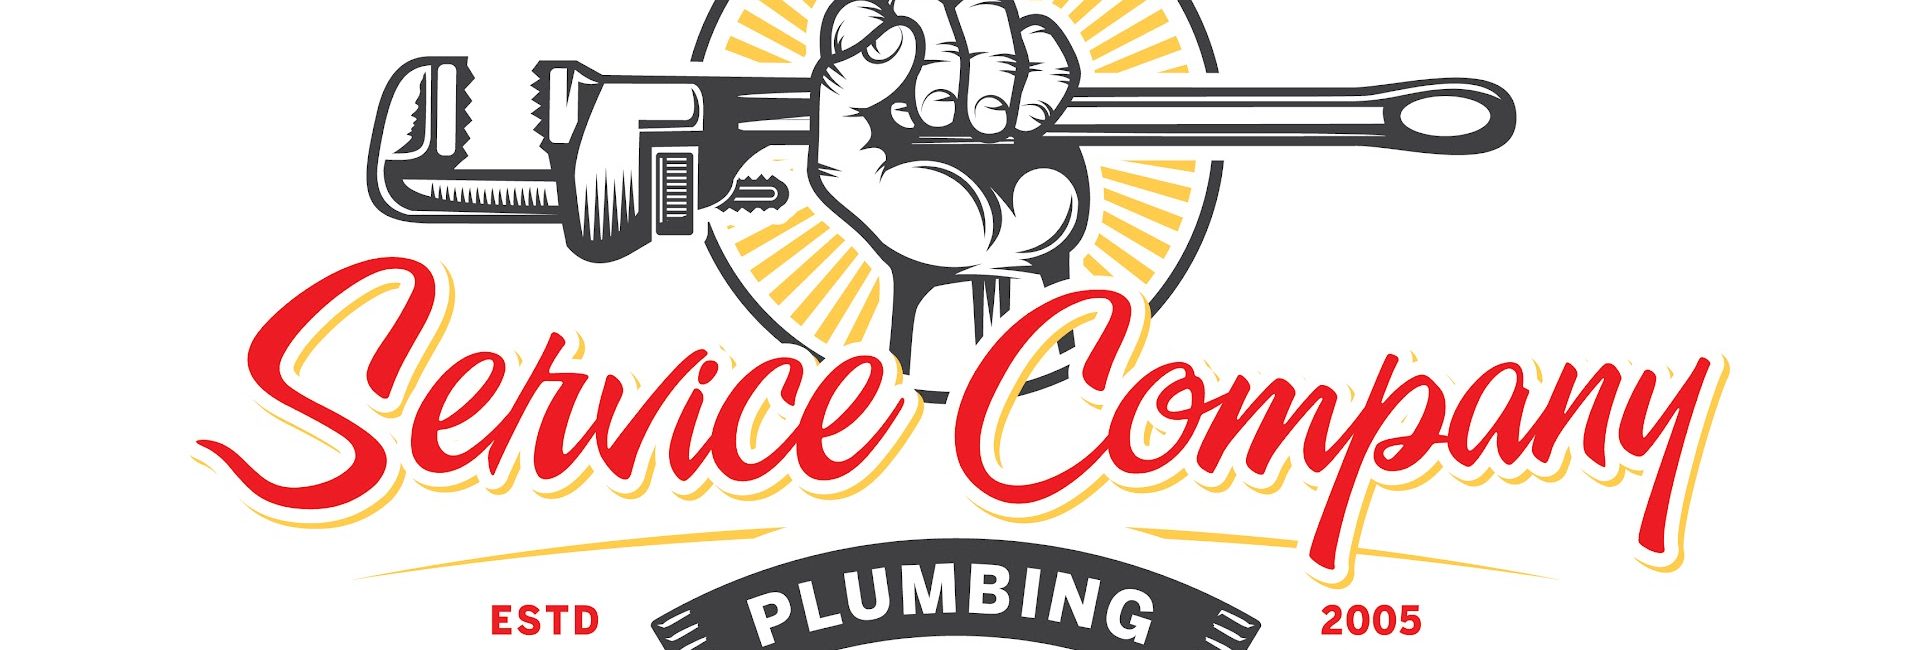 Service Company Plumbing, LLC 4